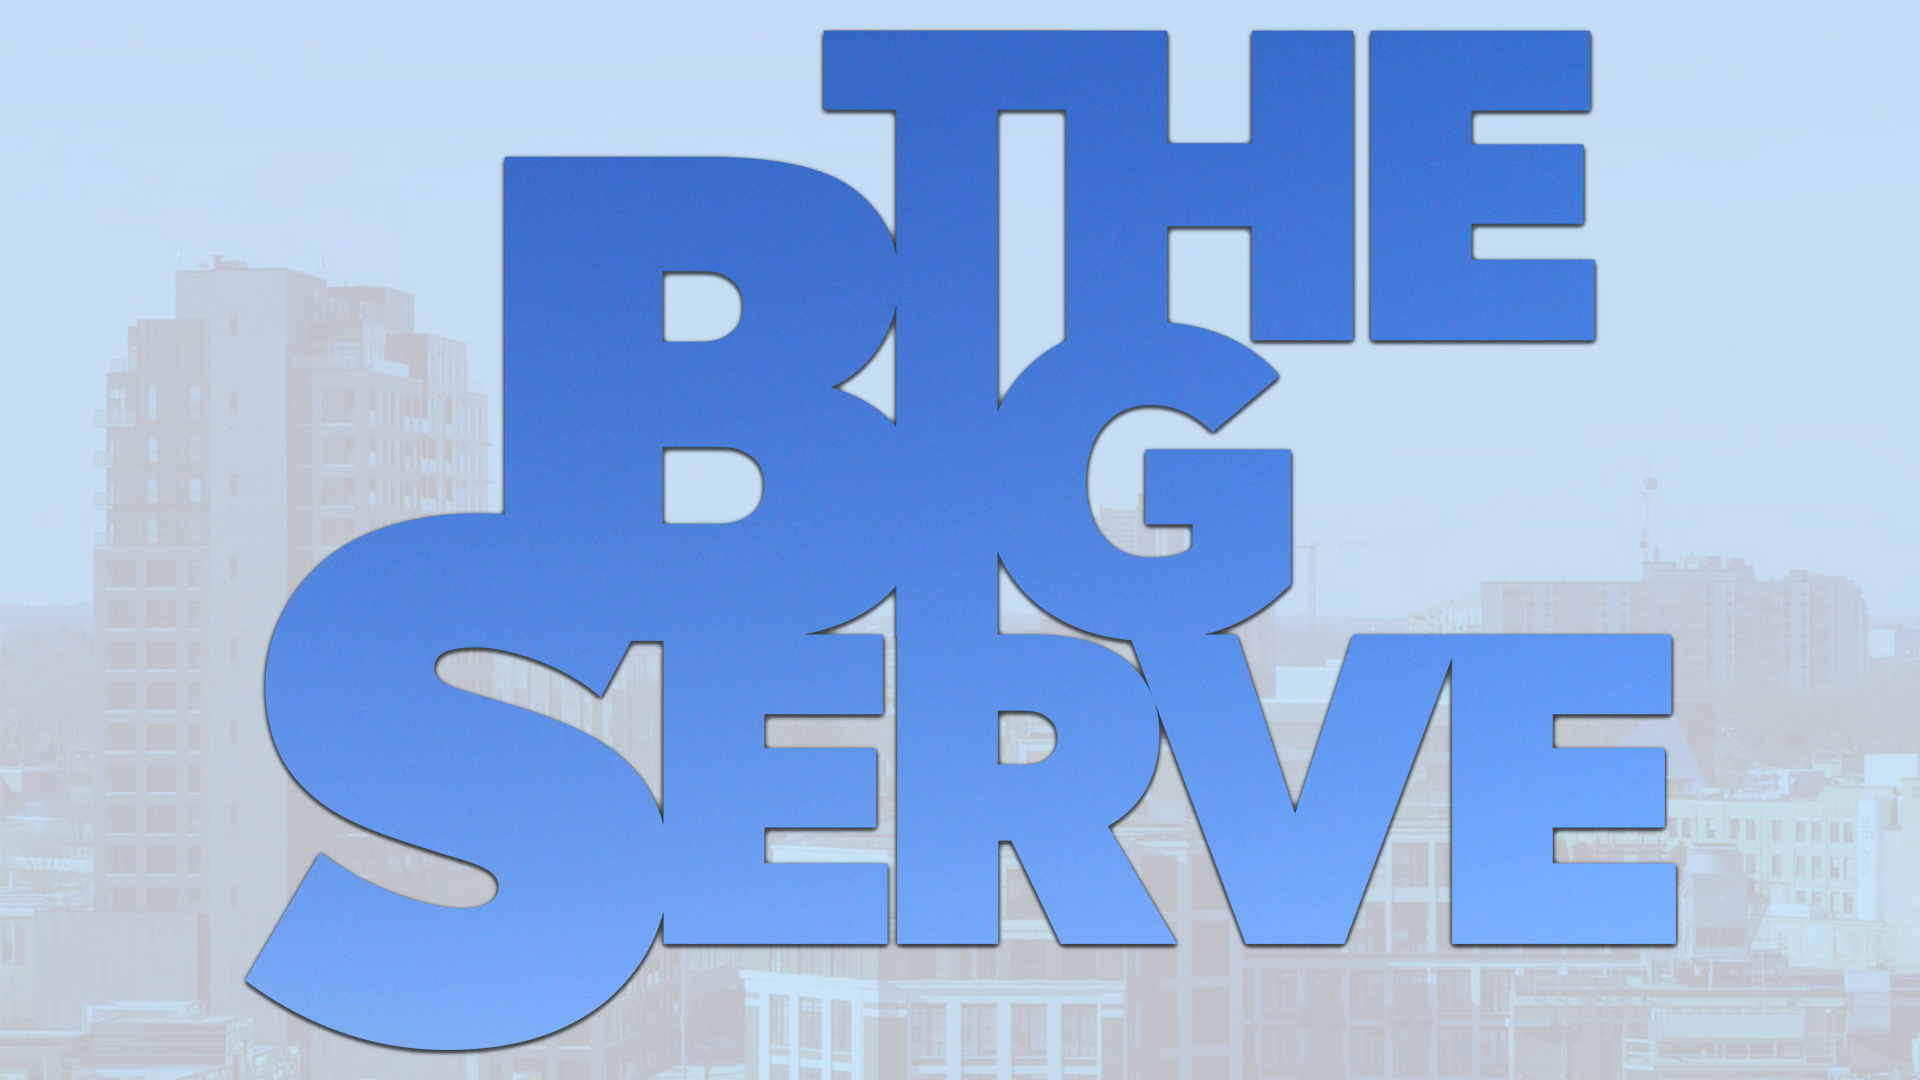 The Big Serve